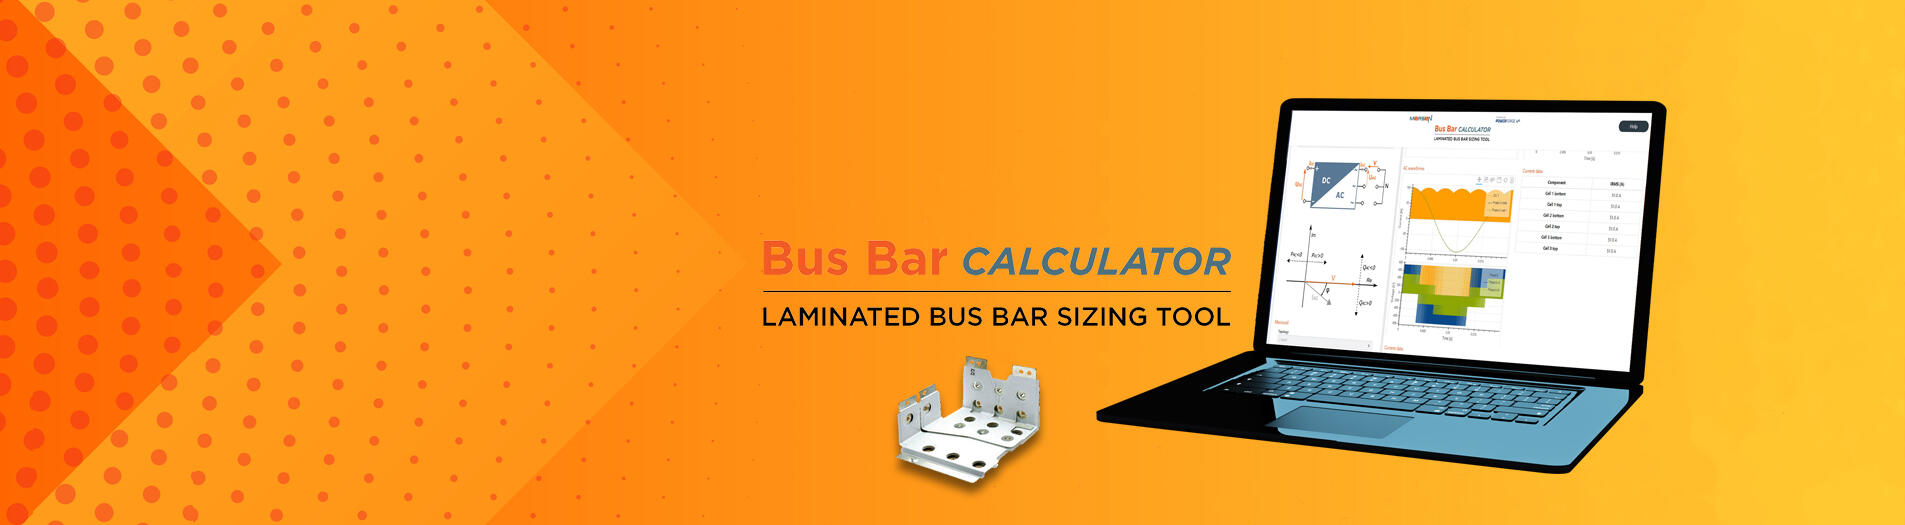 Bus Bar Calculator Home Page Slider